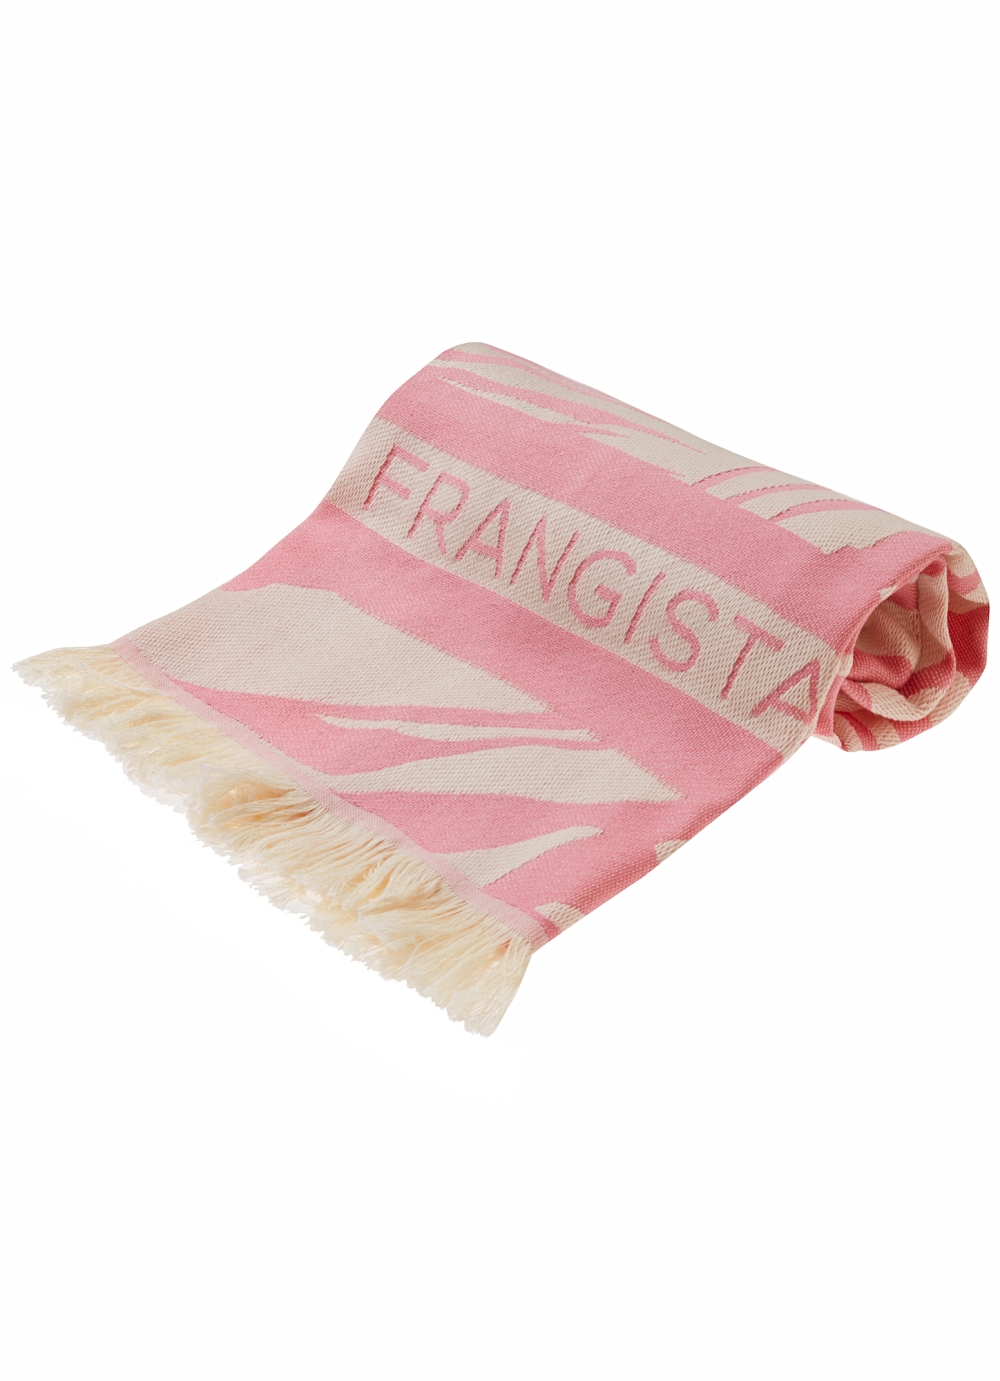 Beach Towel Pink Zebra | STEFANIA FRANGISTA